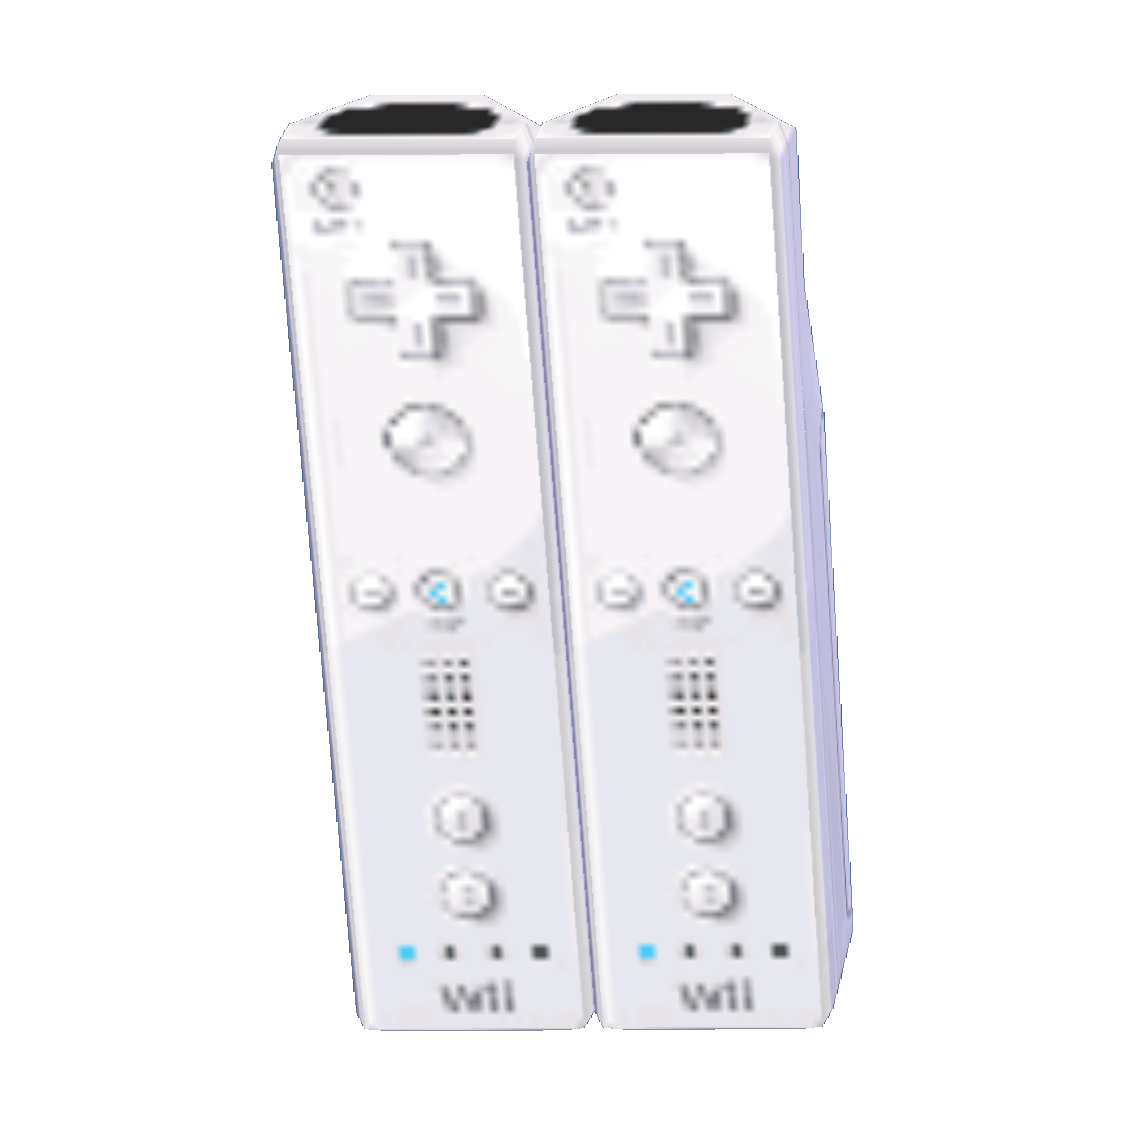 Wii Locker